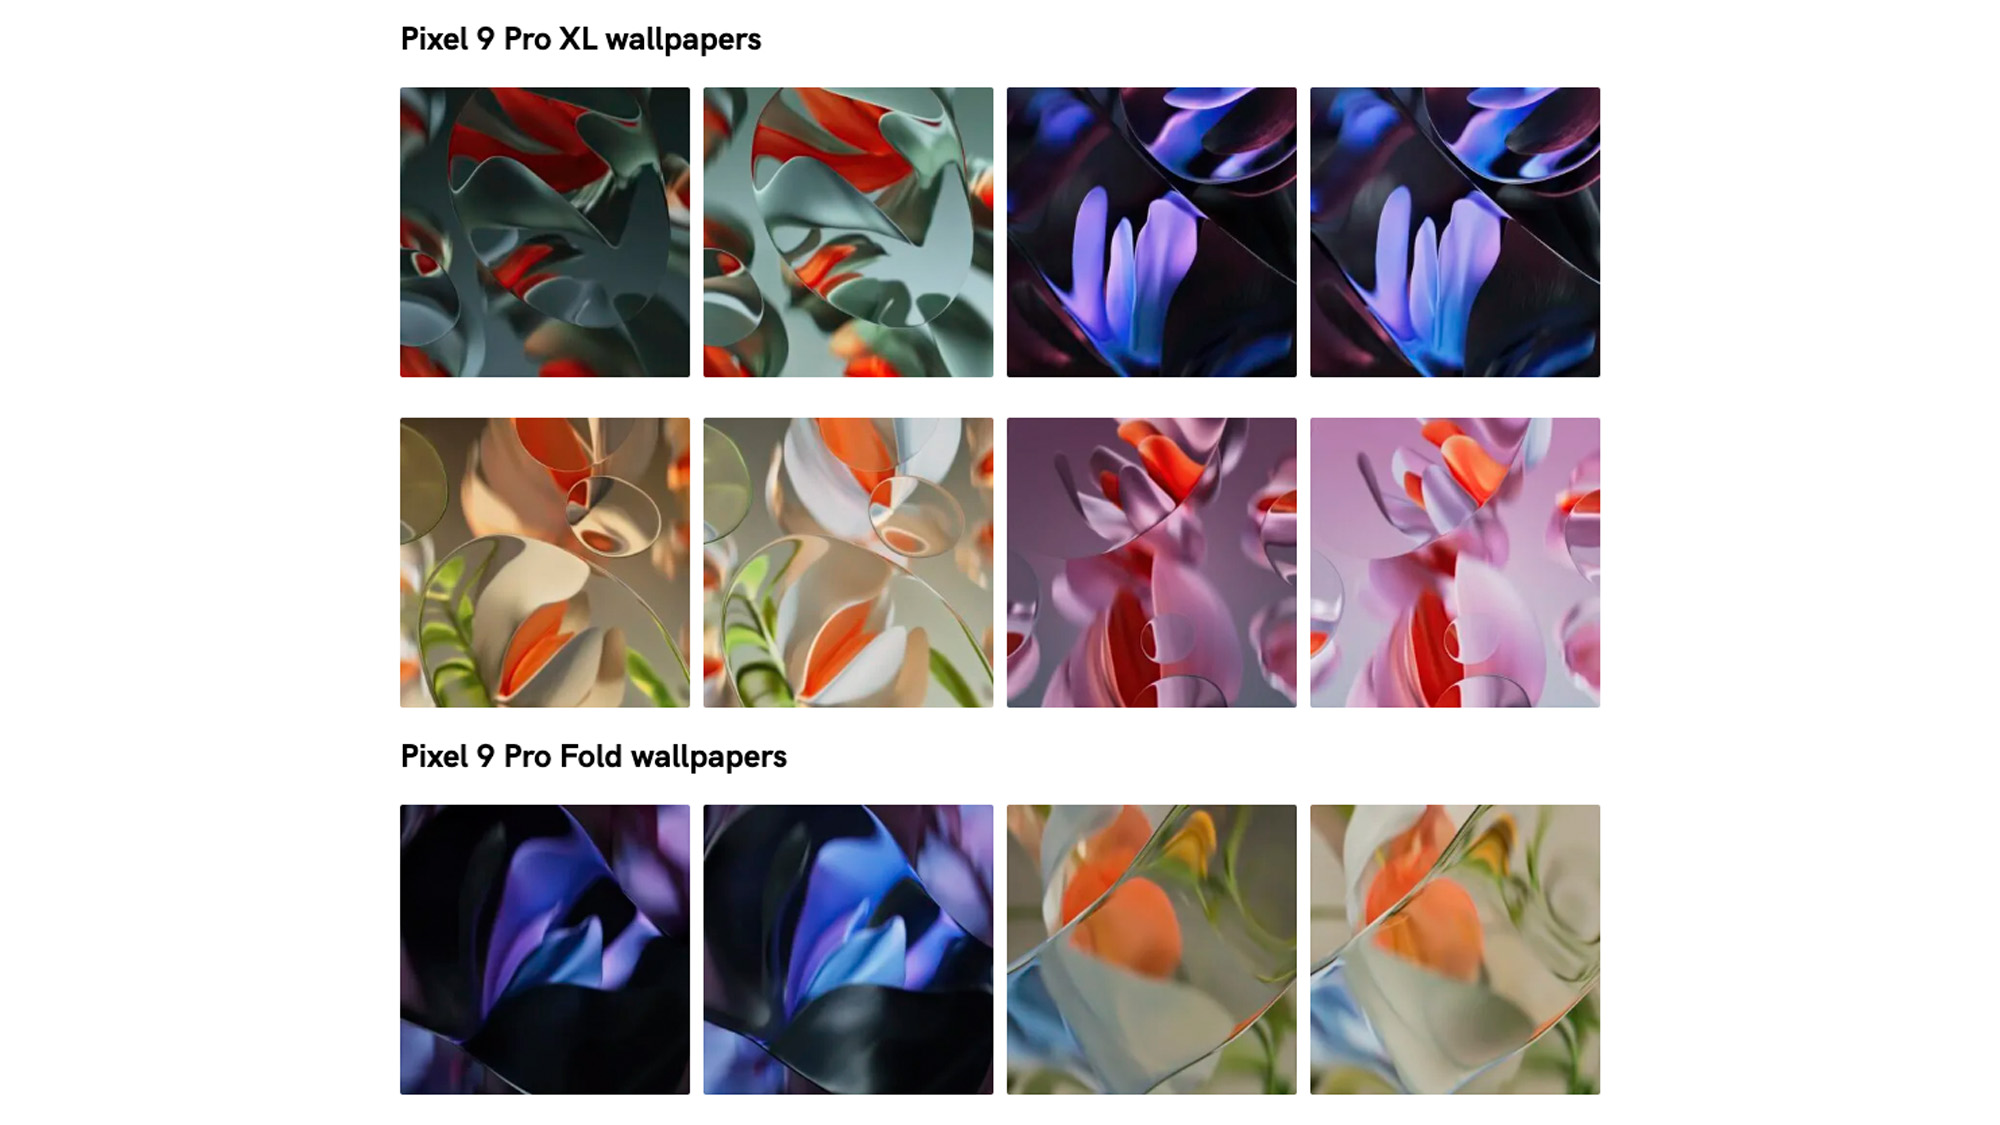 Screenshot of rumored Pixel 9 Pro XL and Pixel 9 Pro Fold wallpapers